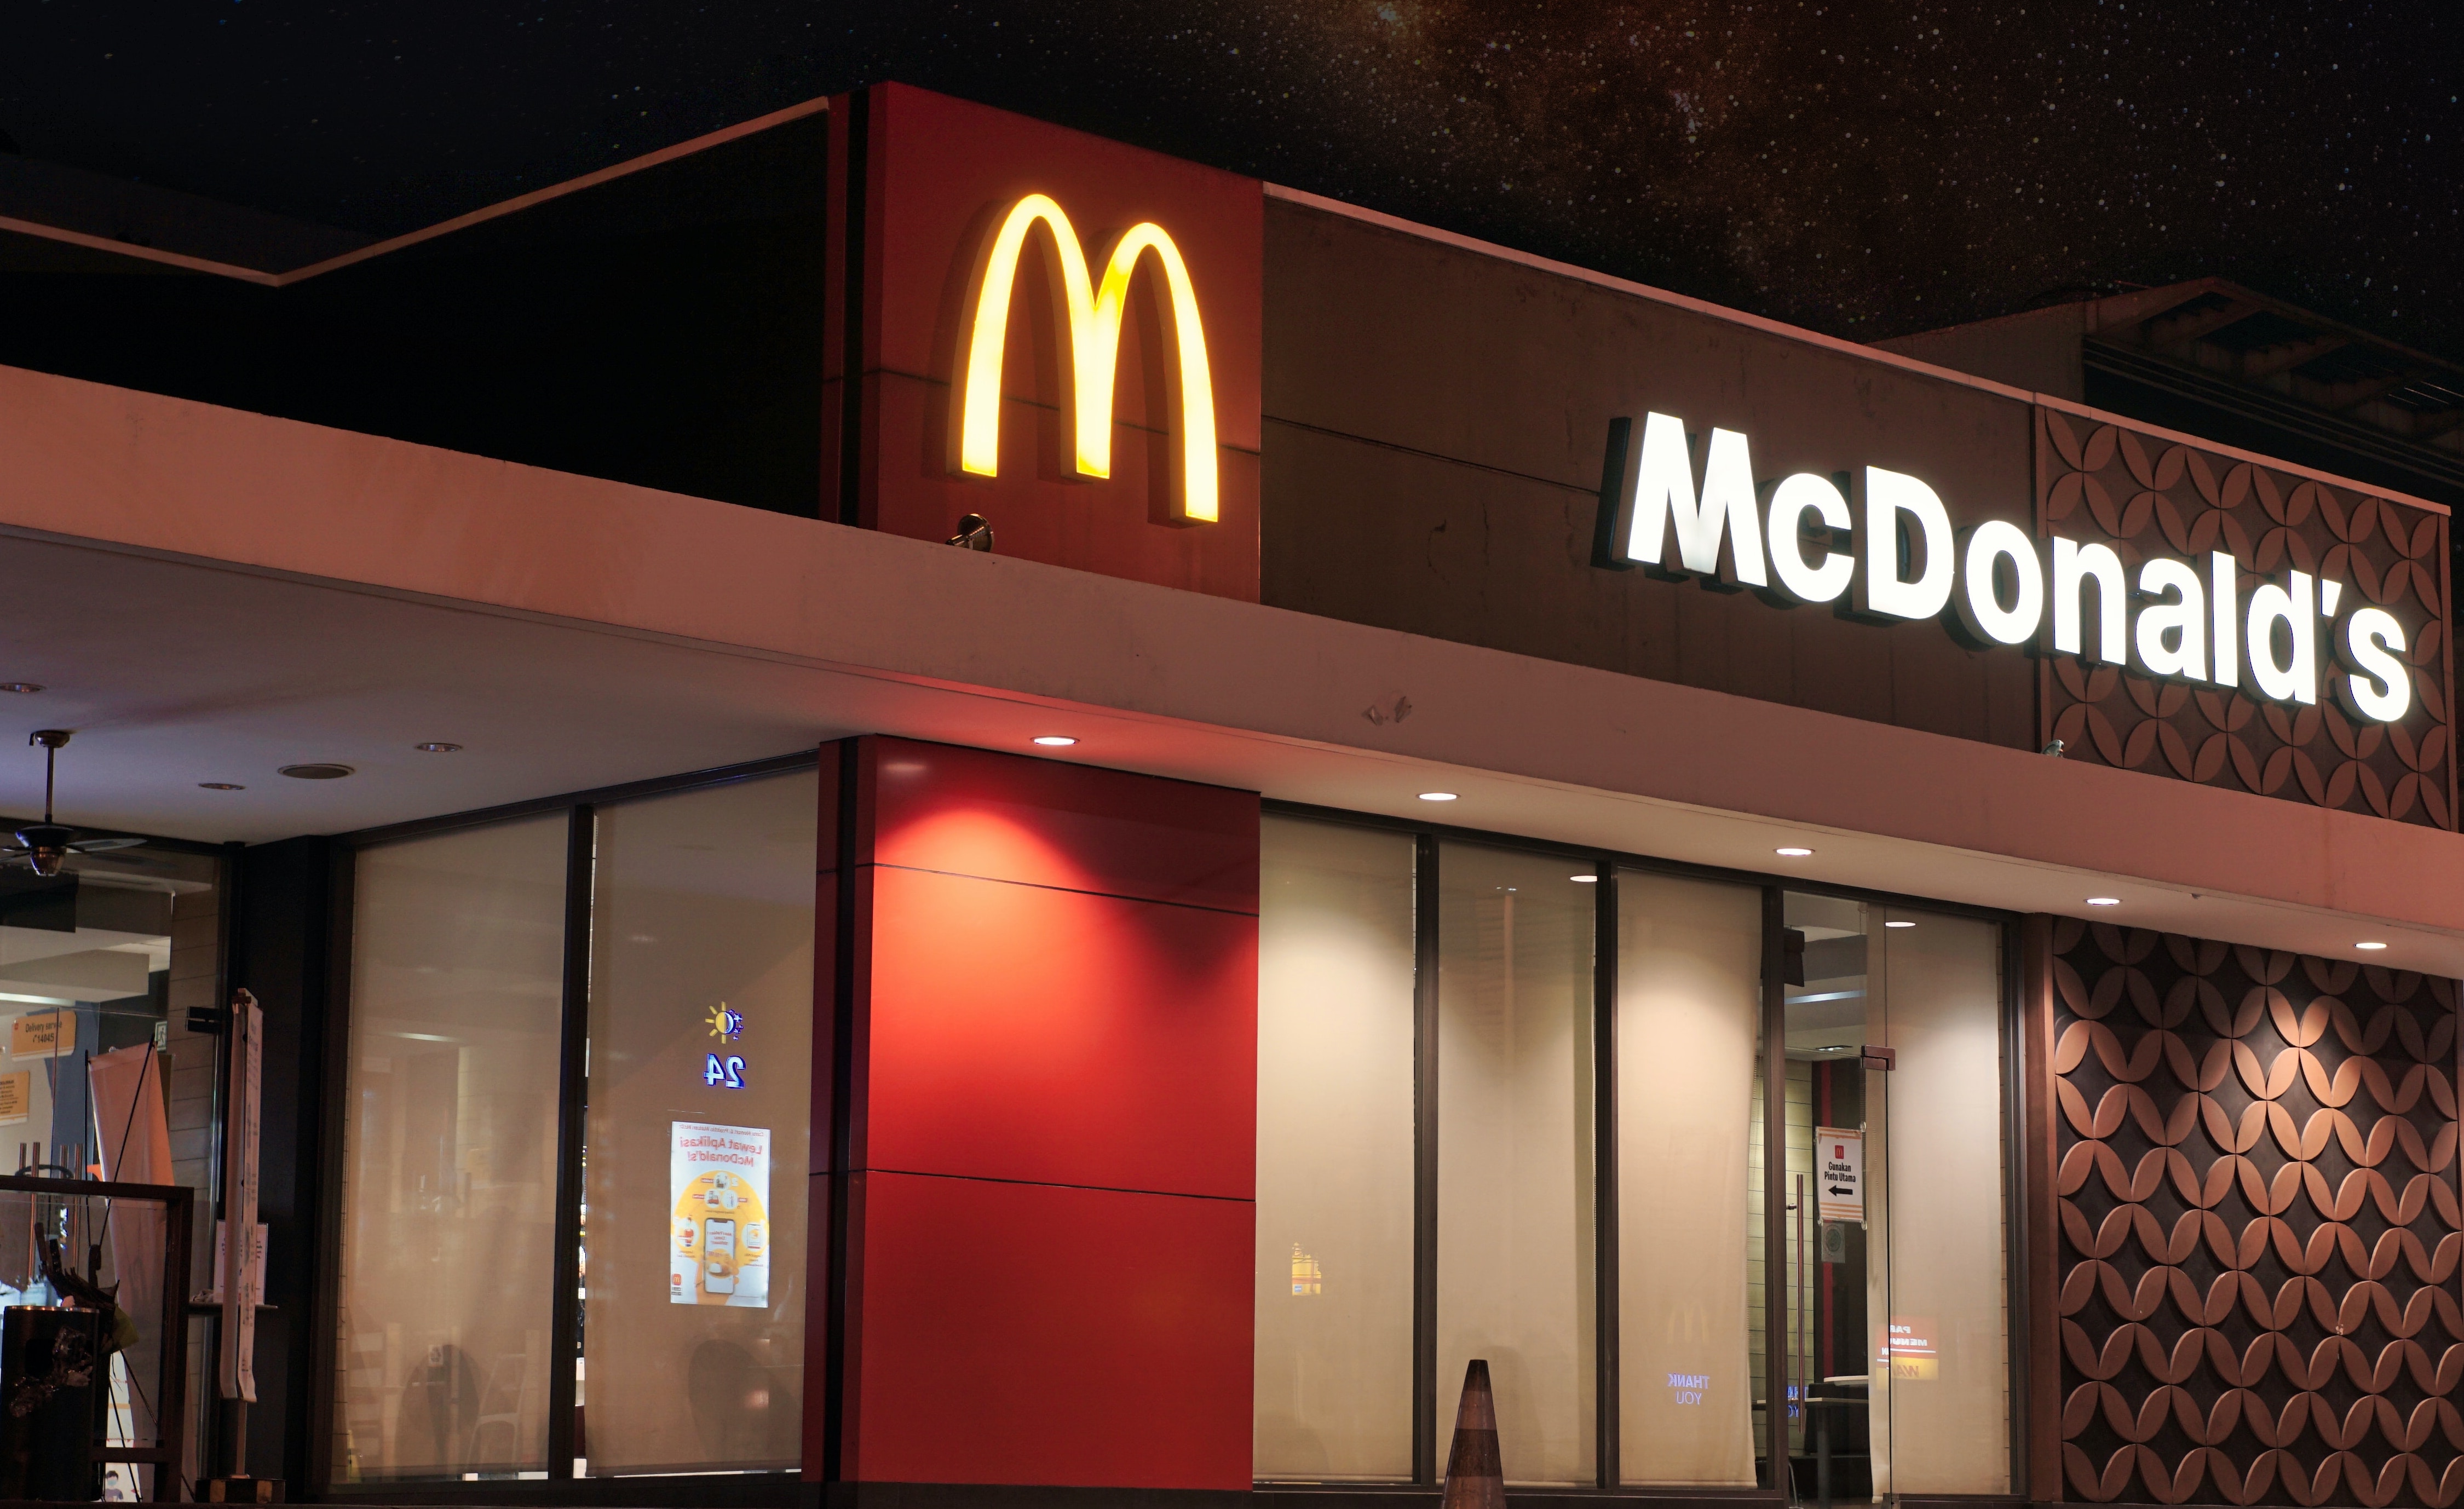 McDonald's vlees McKroket X